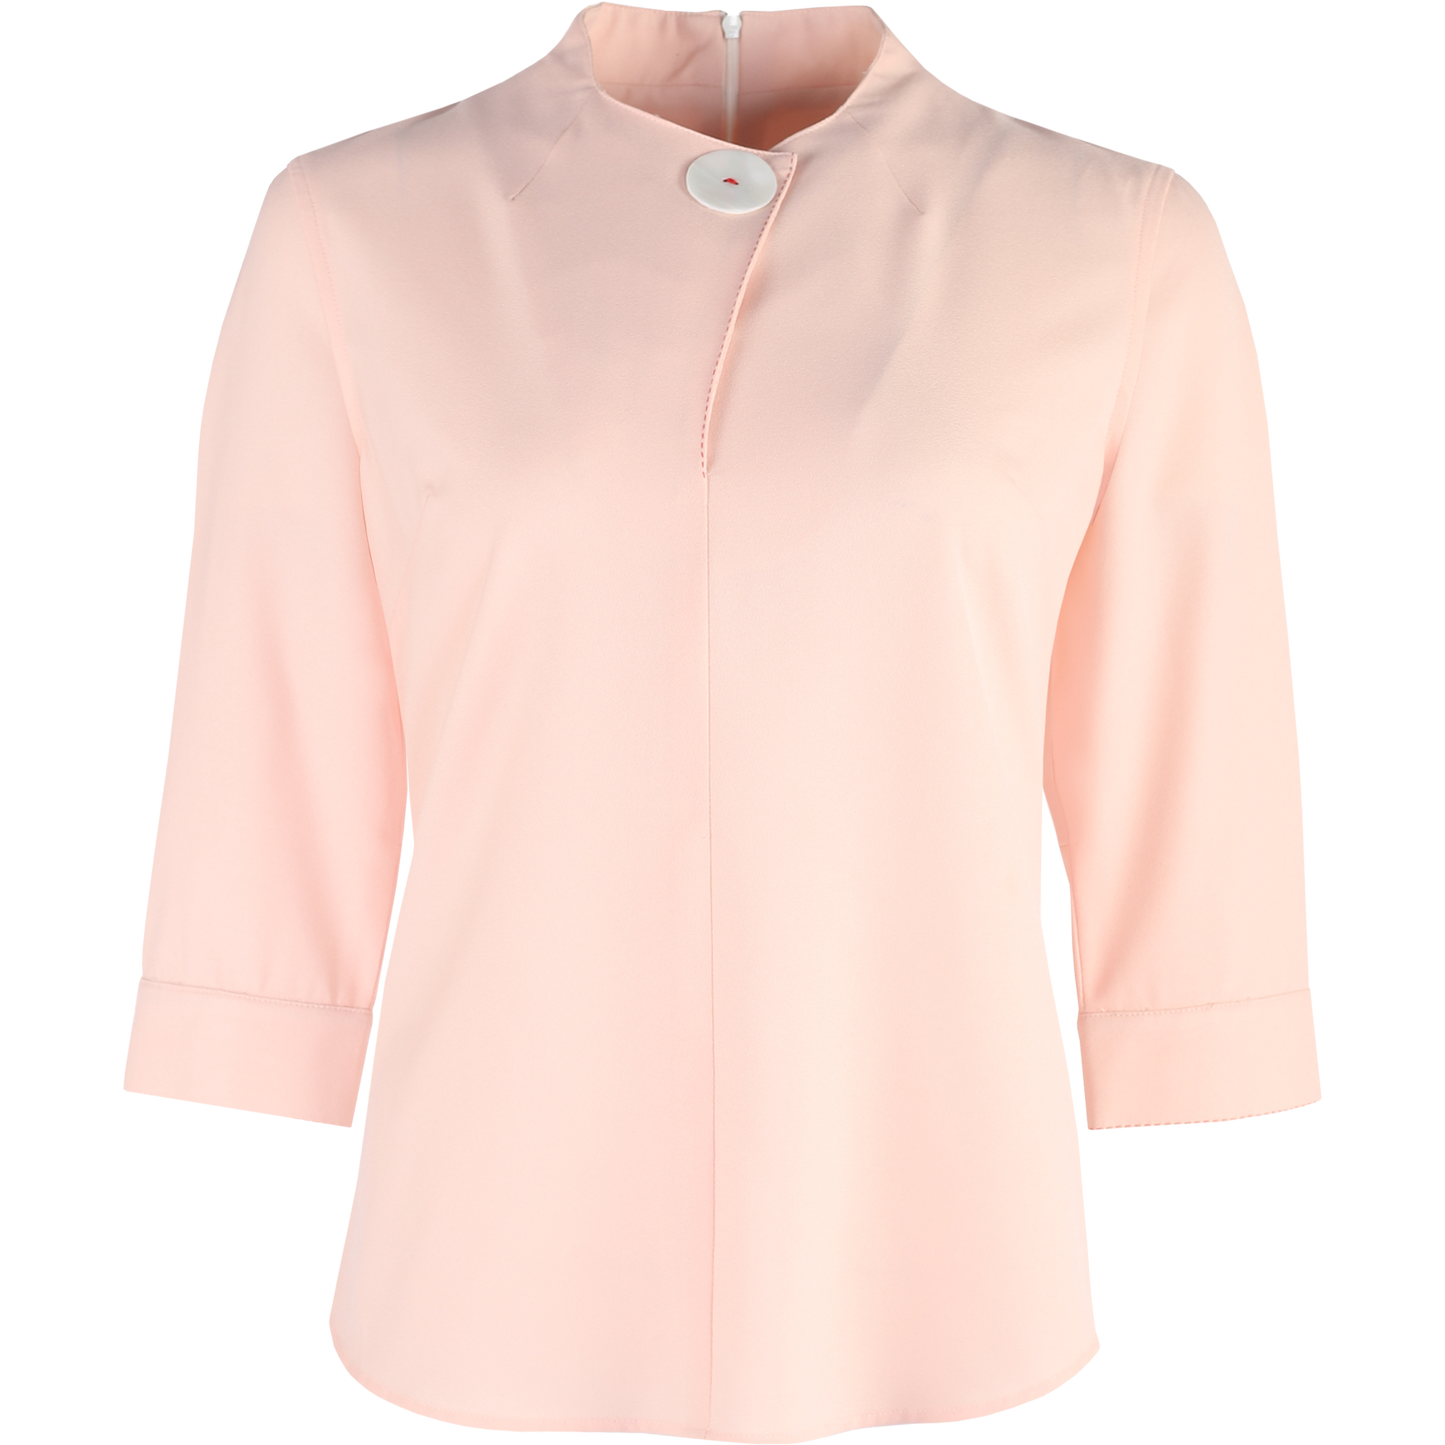 Peach Ladies Blouse Uniform for Front Line Associates by CYC